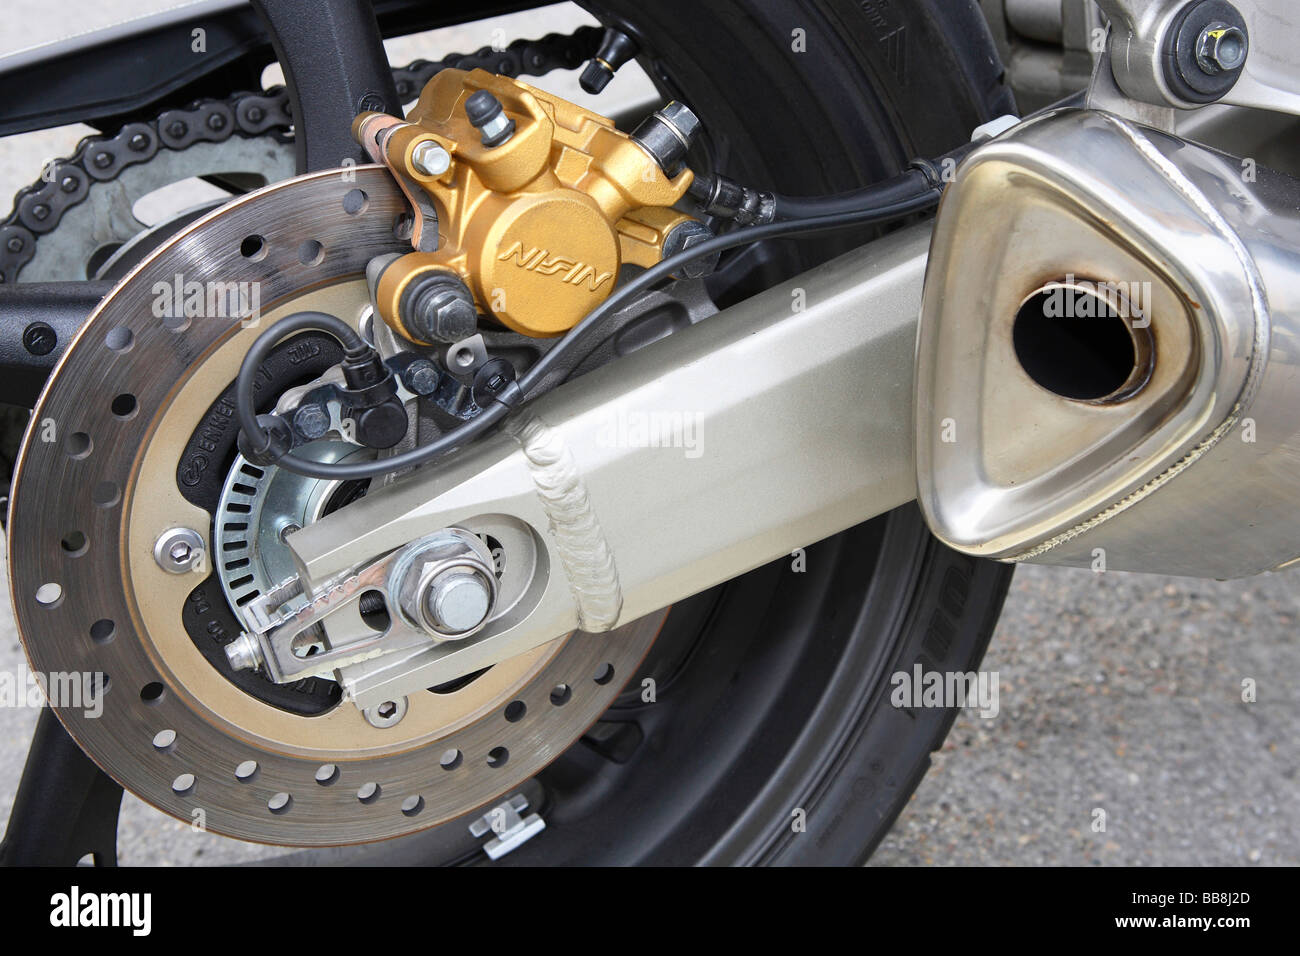 Moto Honda Varadero 125 en pays, fabriqué au Japon Photo Stock - Alamy